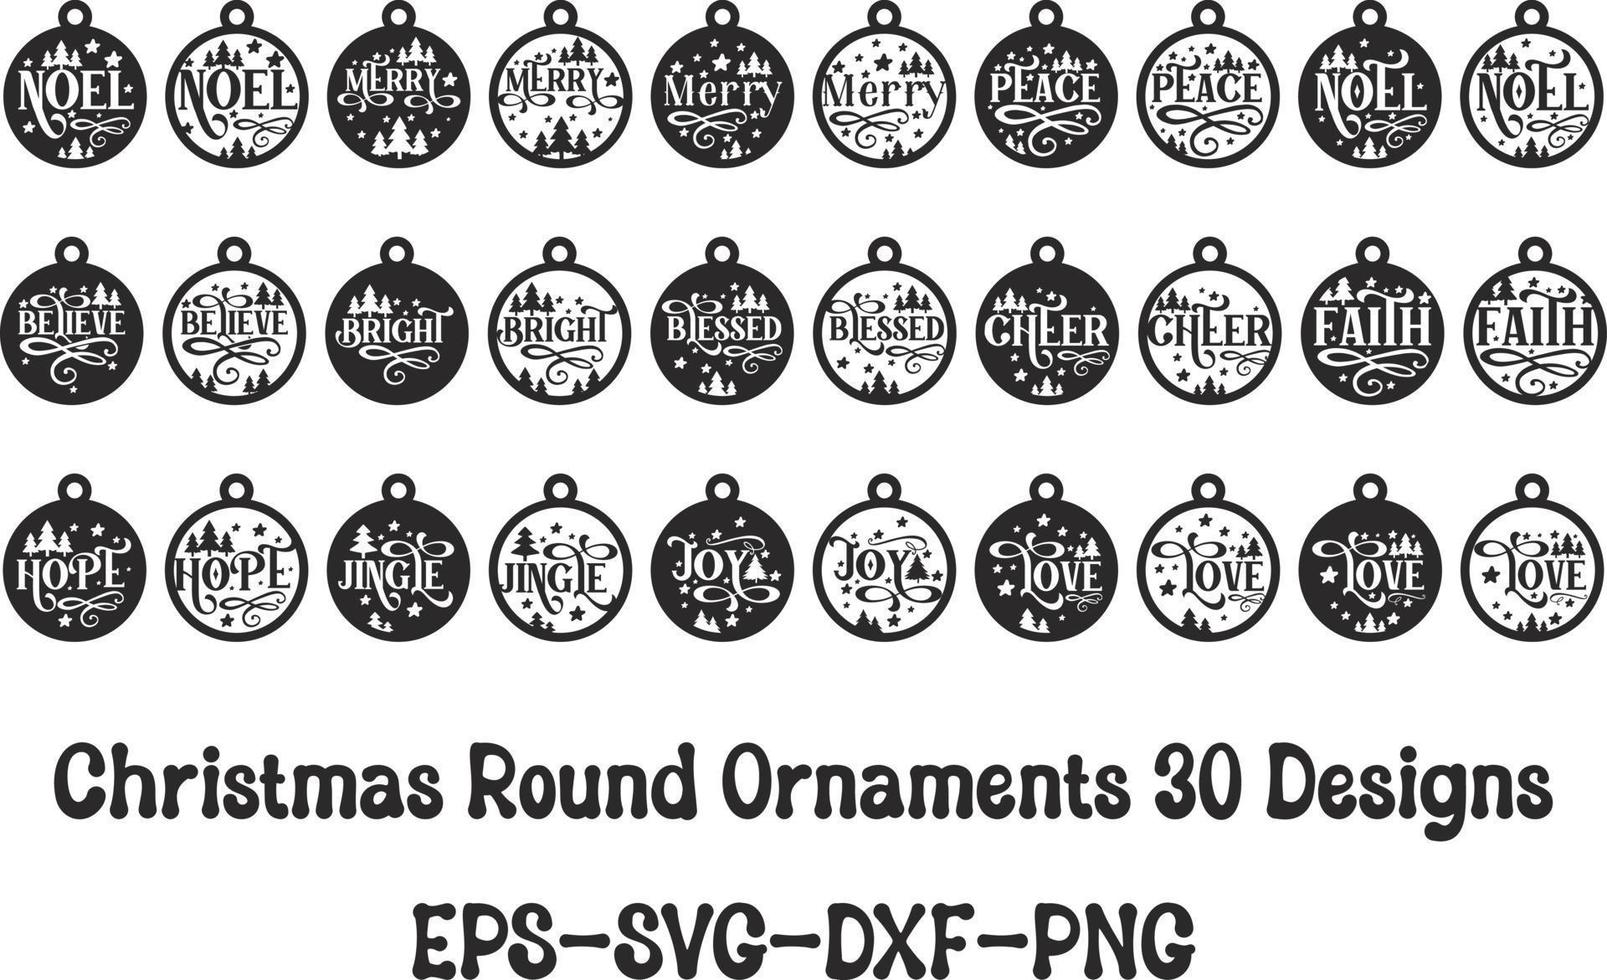 elemento ornamentos redondos de natal 30 designs vetor